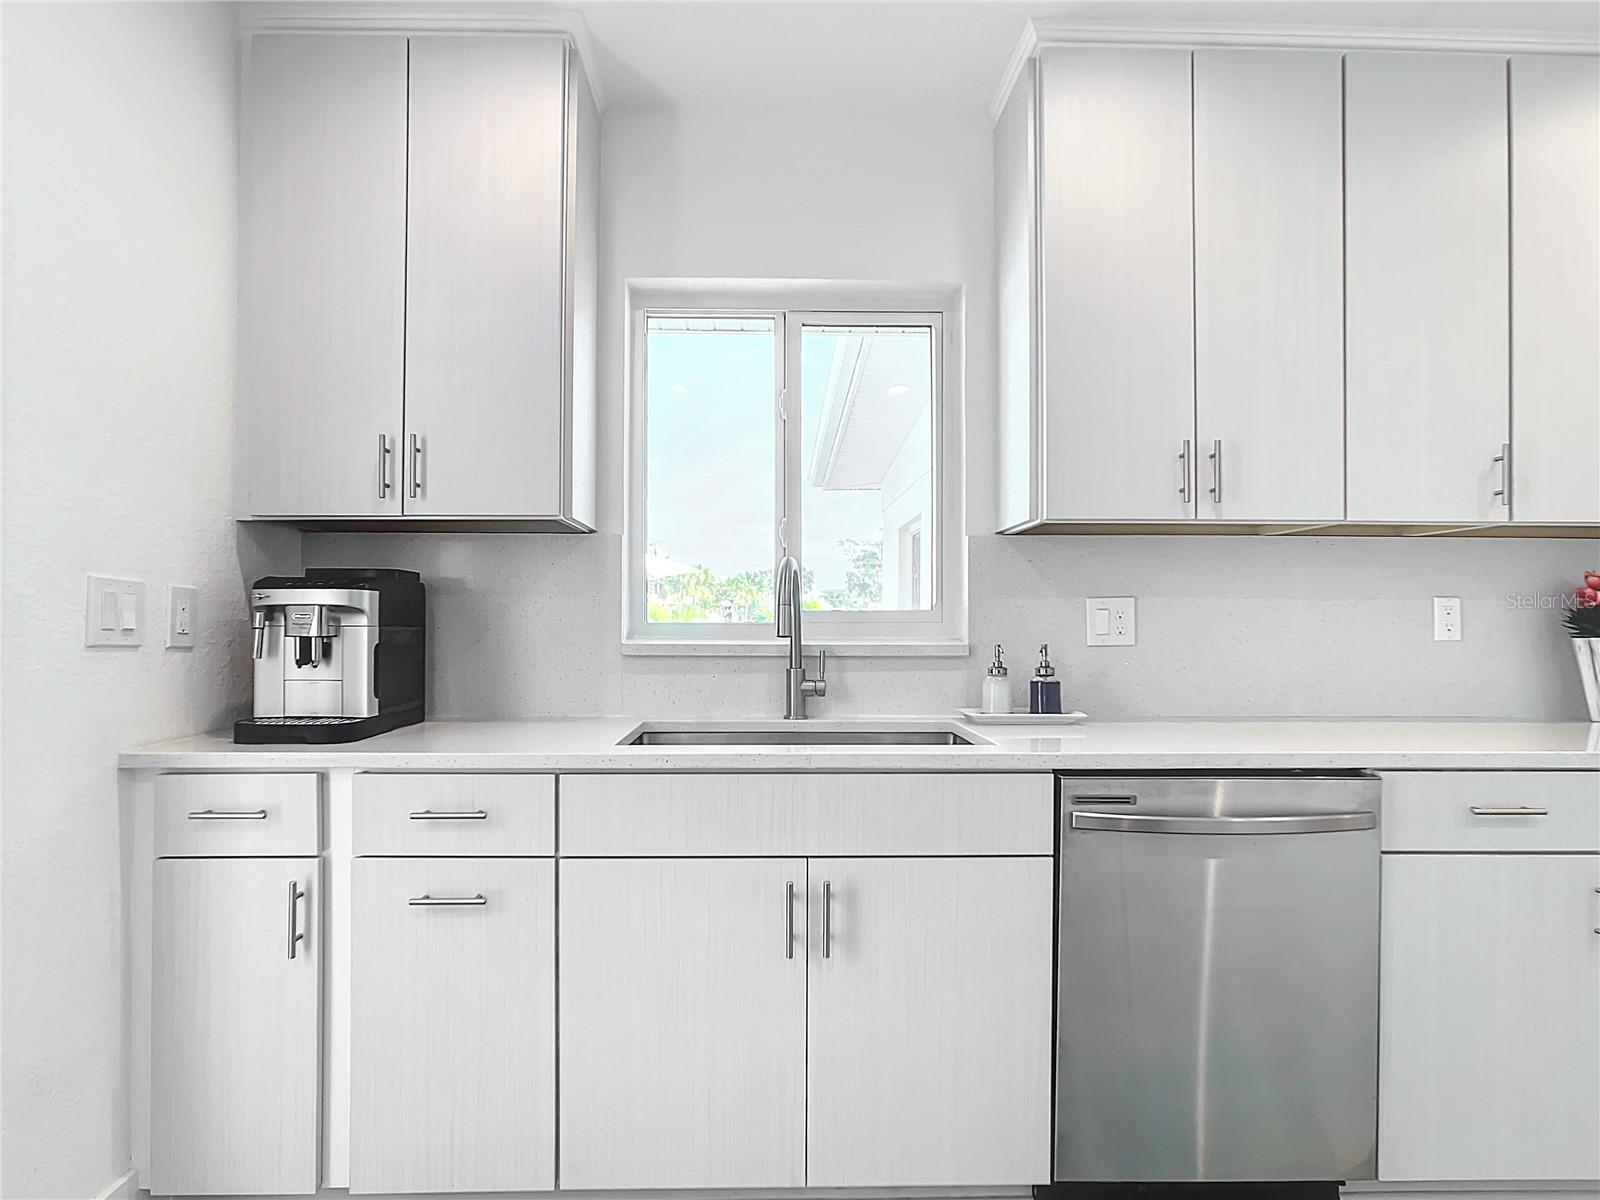 Modern neutral kitchen cabinets and quartz countertops